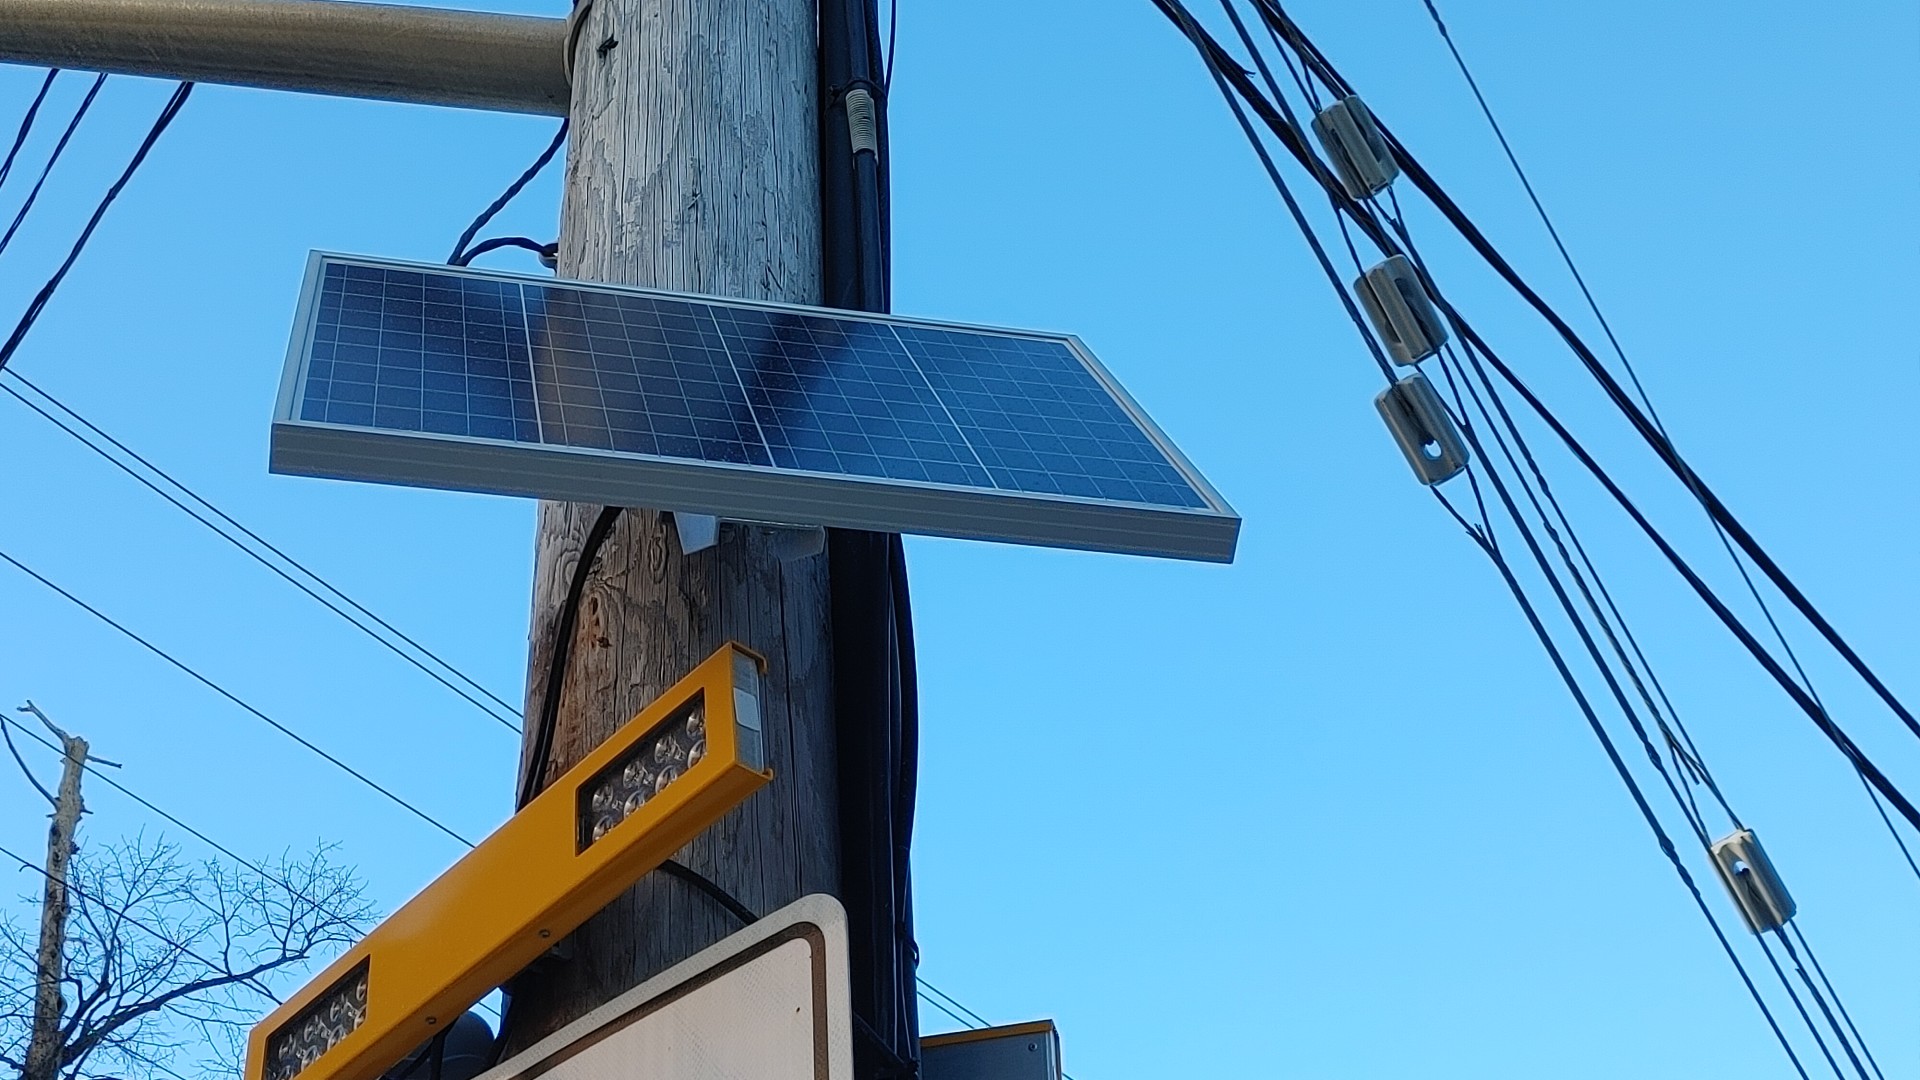 A solar panel on South street that powers the pedestrian crosswalks. 